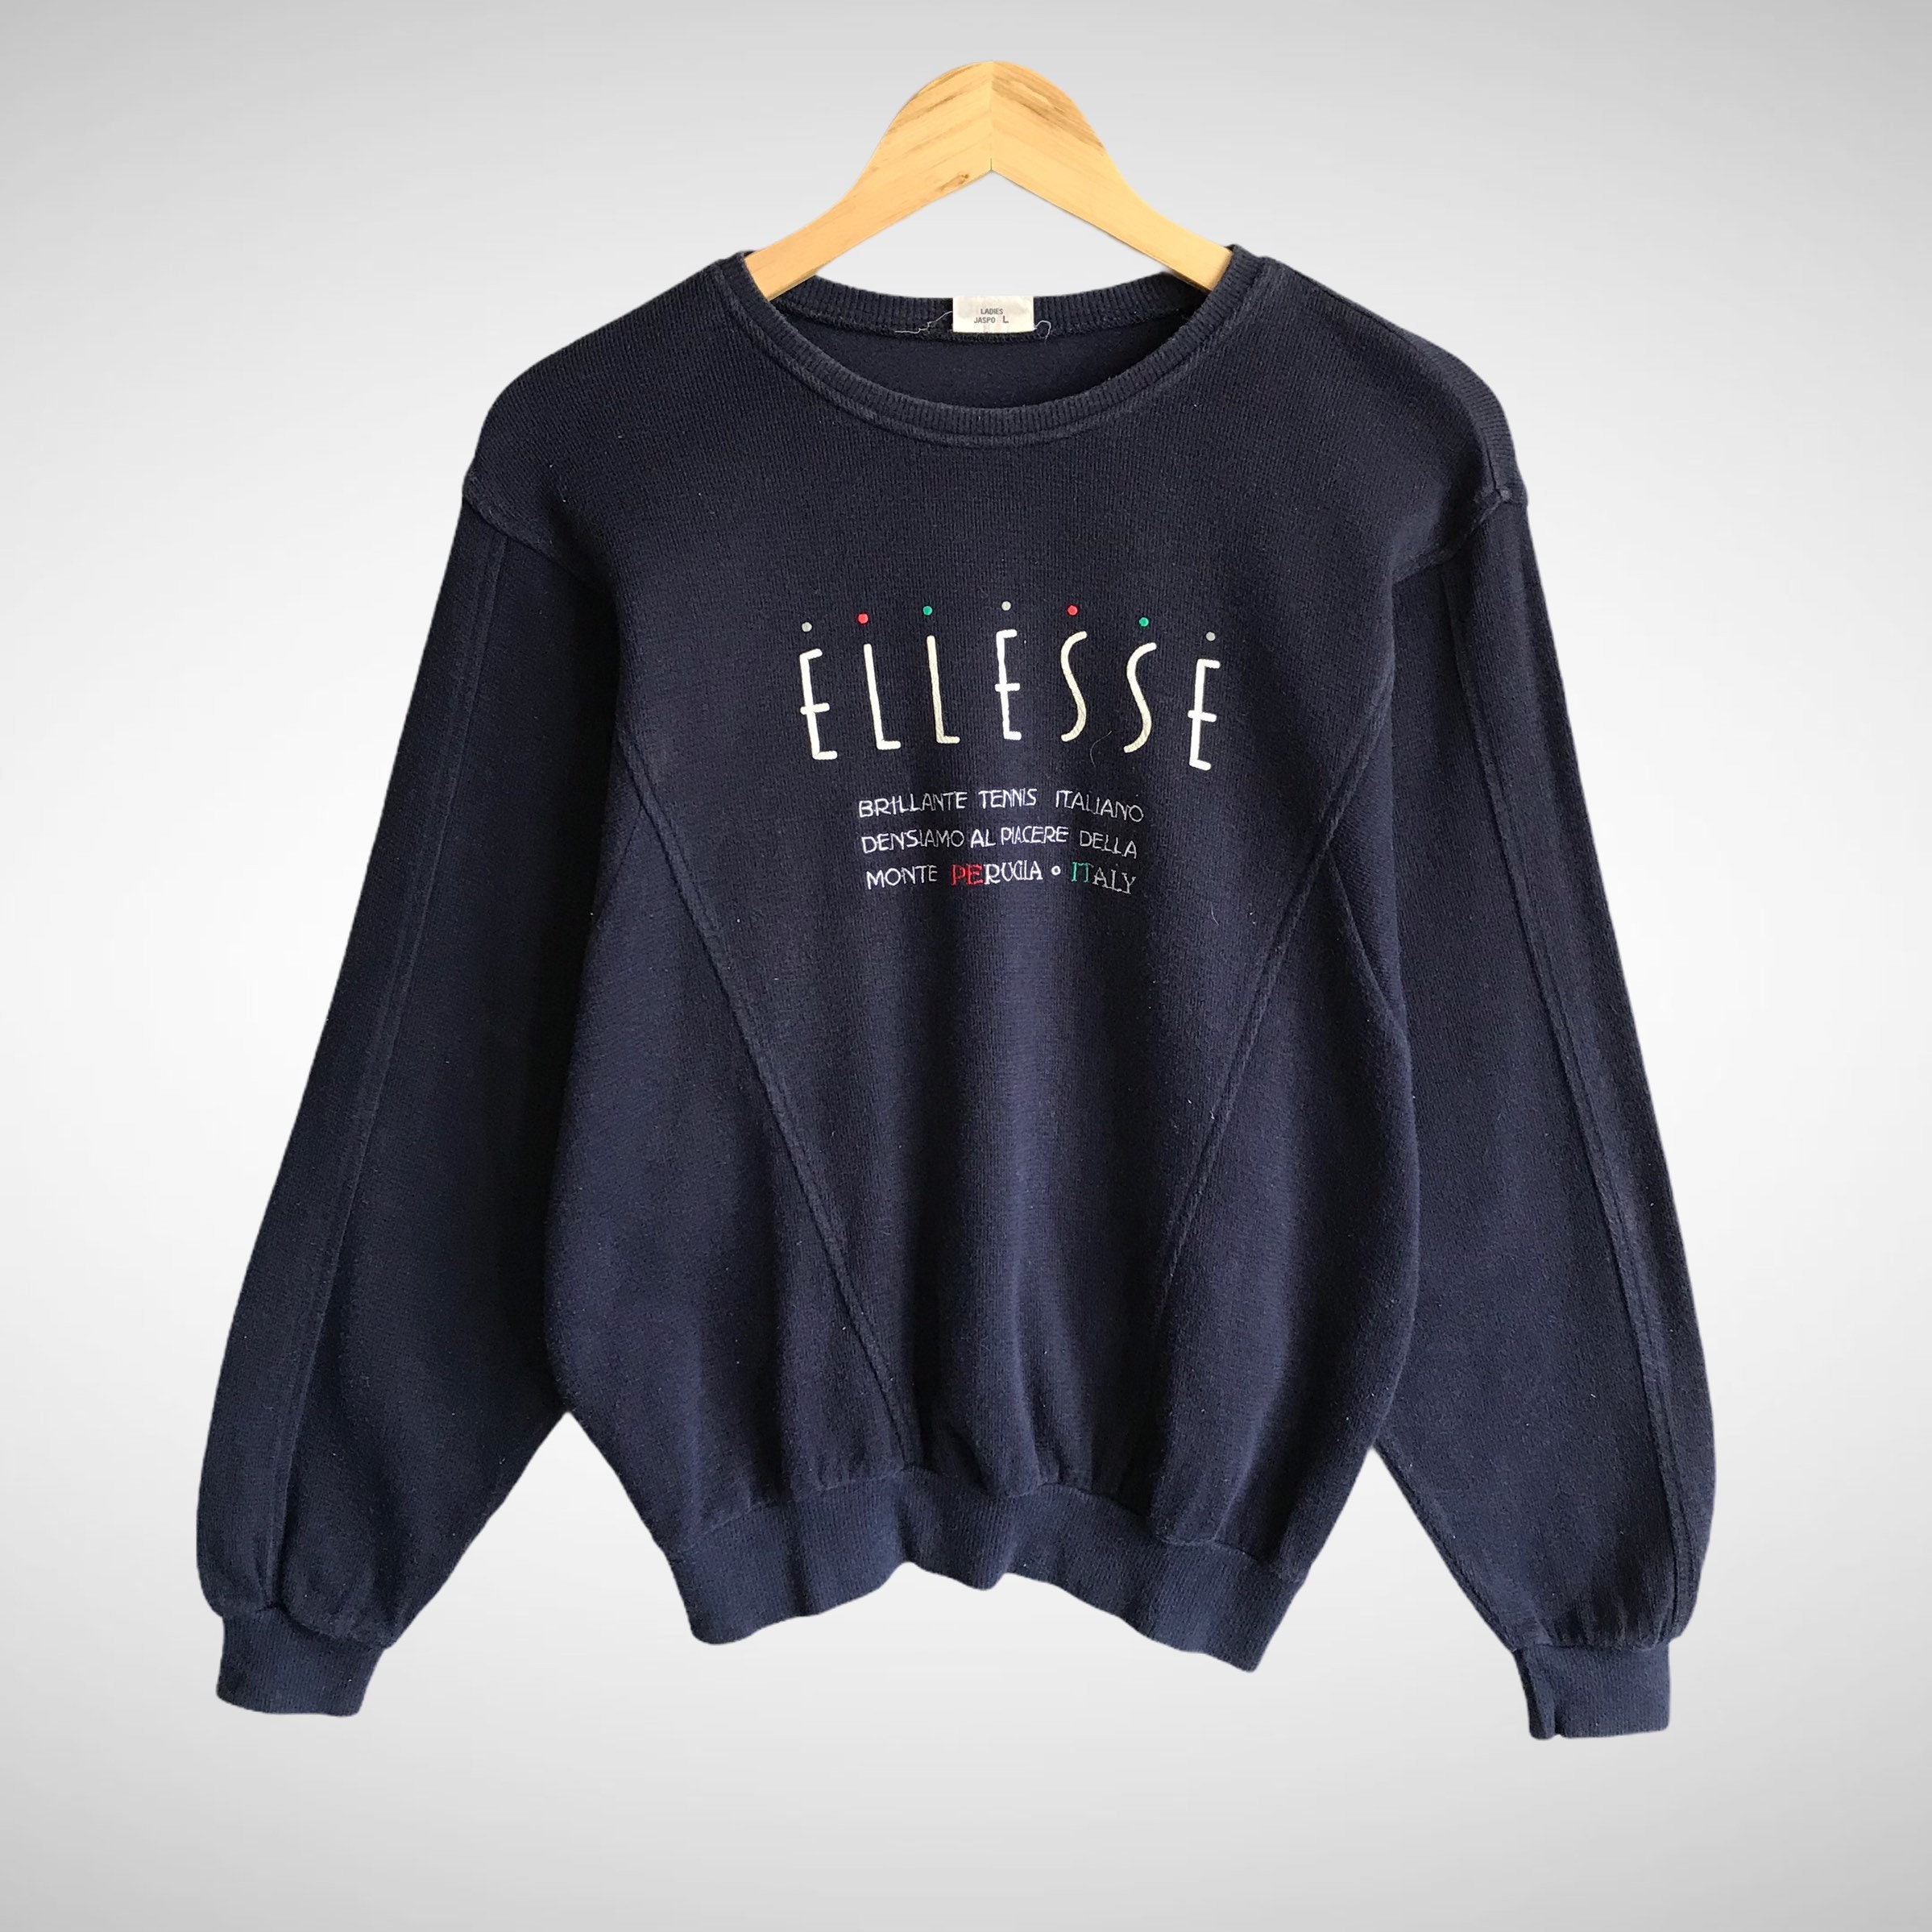 Ellesse - Sweater Etsy